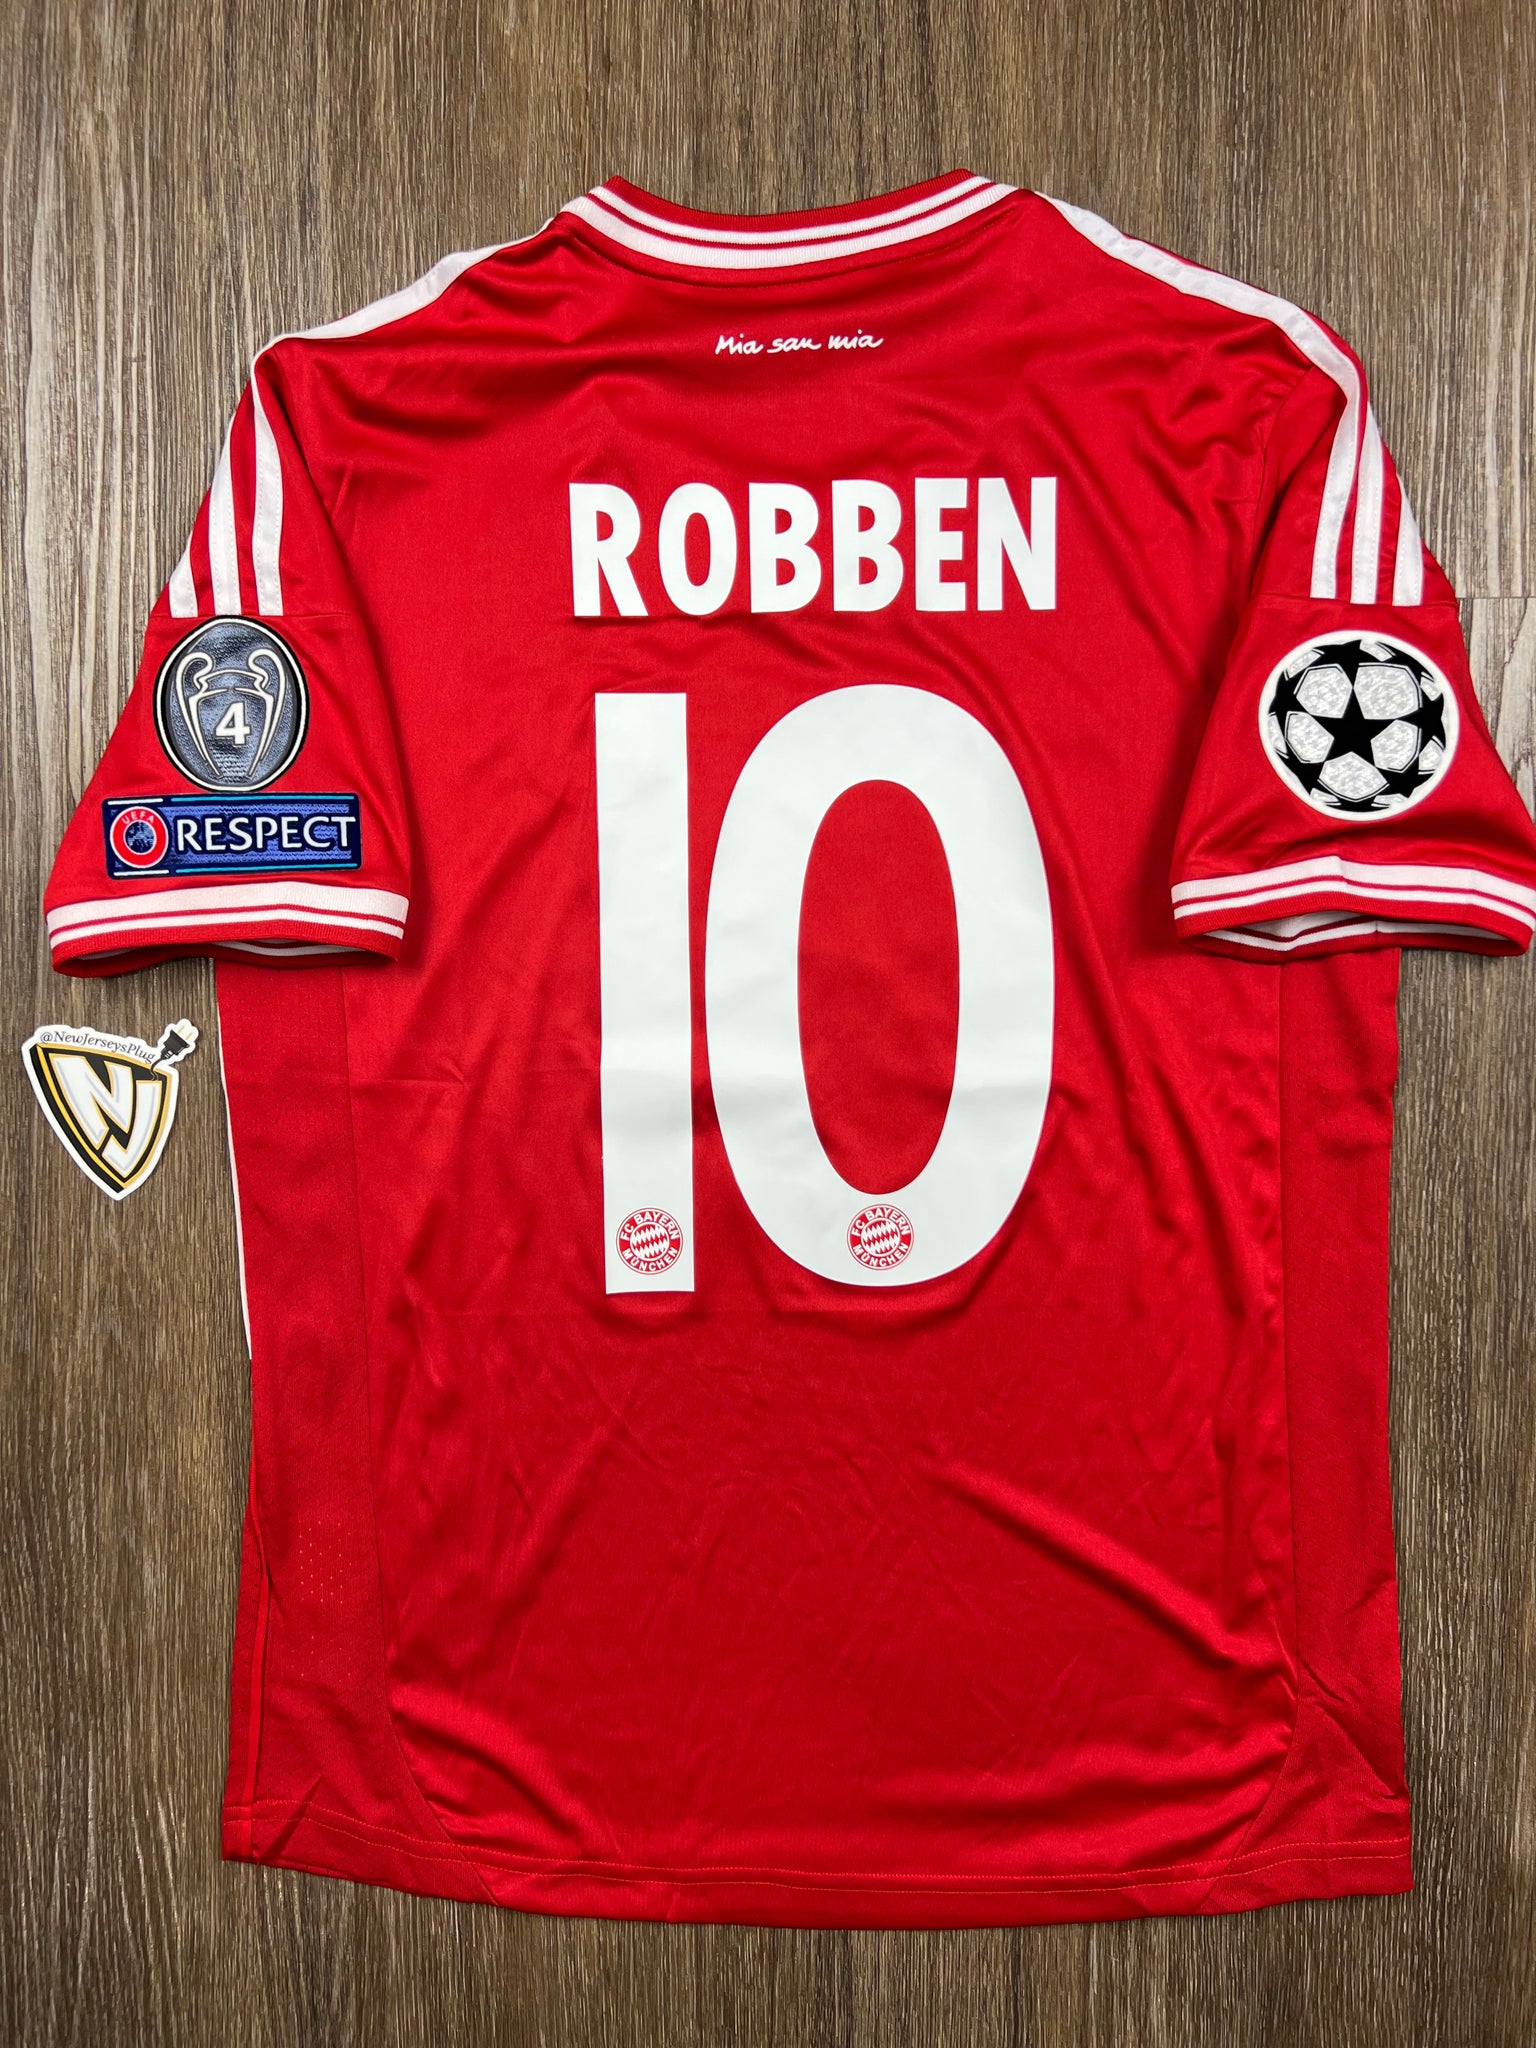 12/13 Bayern Munich Arjen Robben Home Jersey